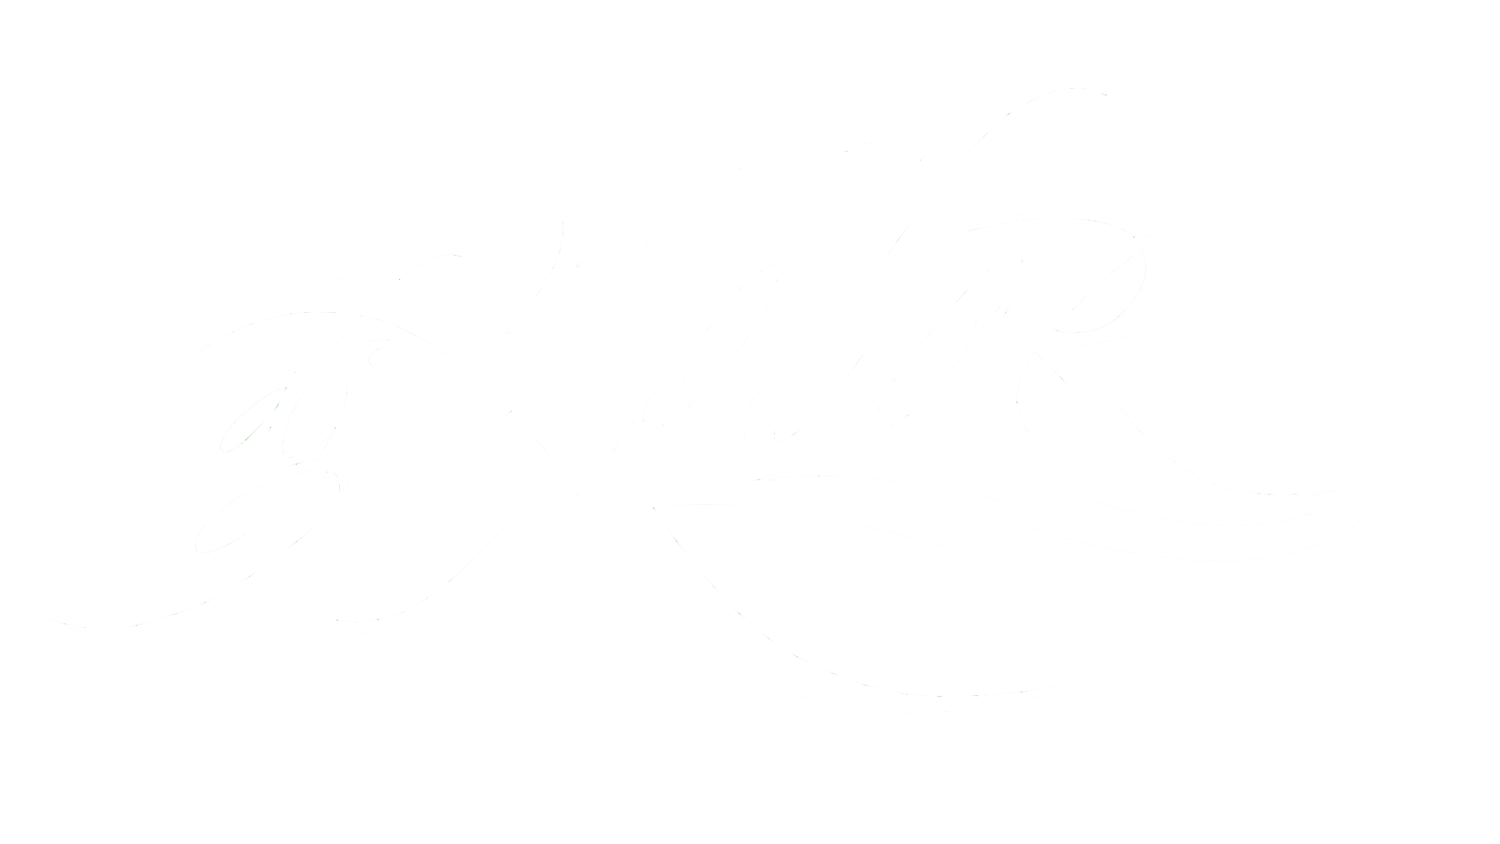 DJ XPLOR